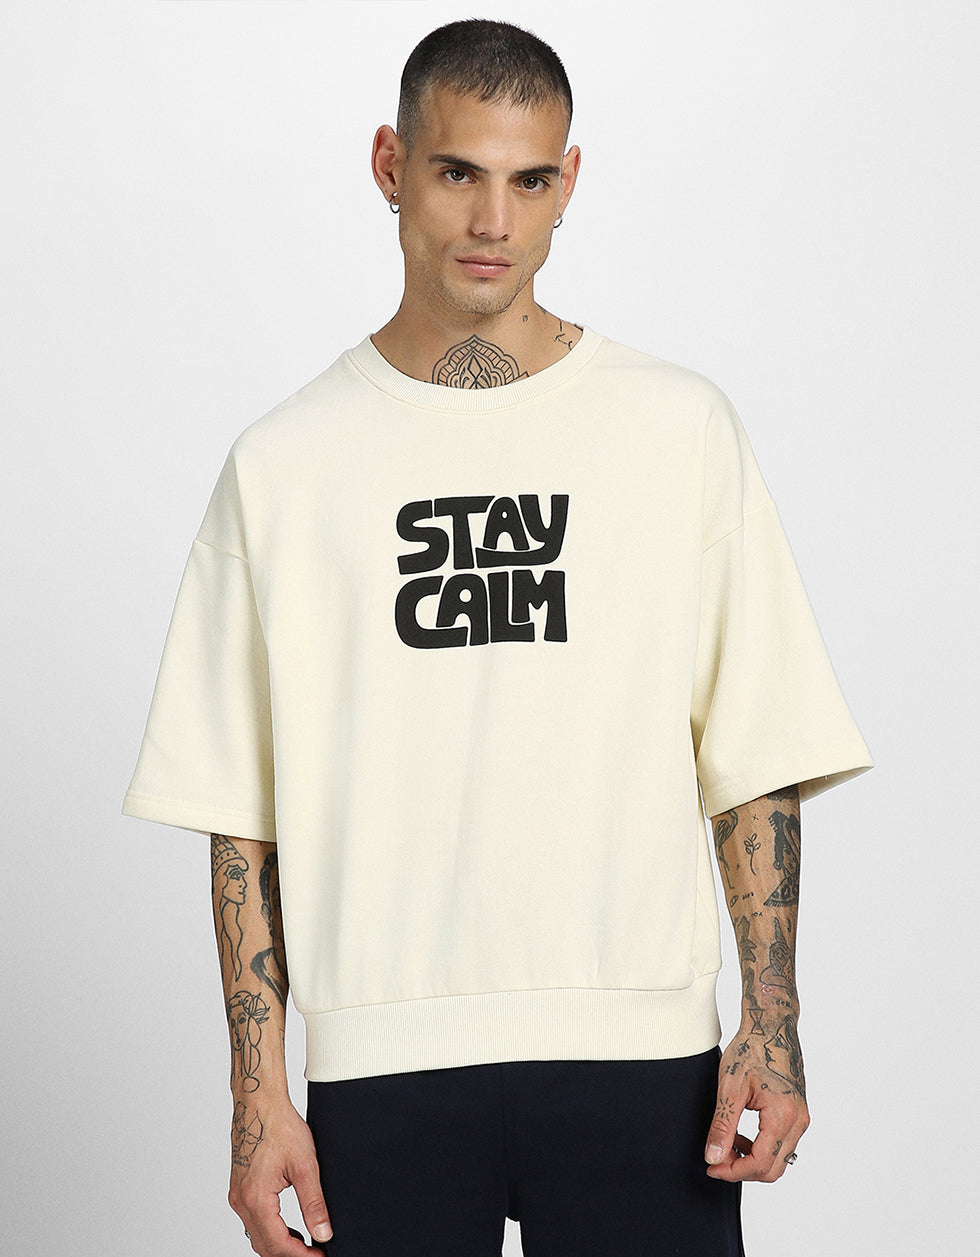 Calm Vibes: Stay Calm Print Beige Half Sleeve Sweatshirt Veirdo